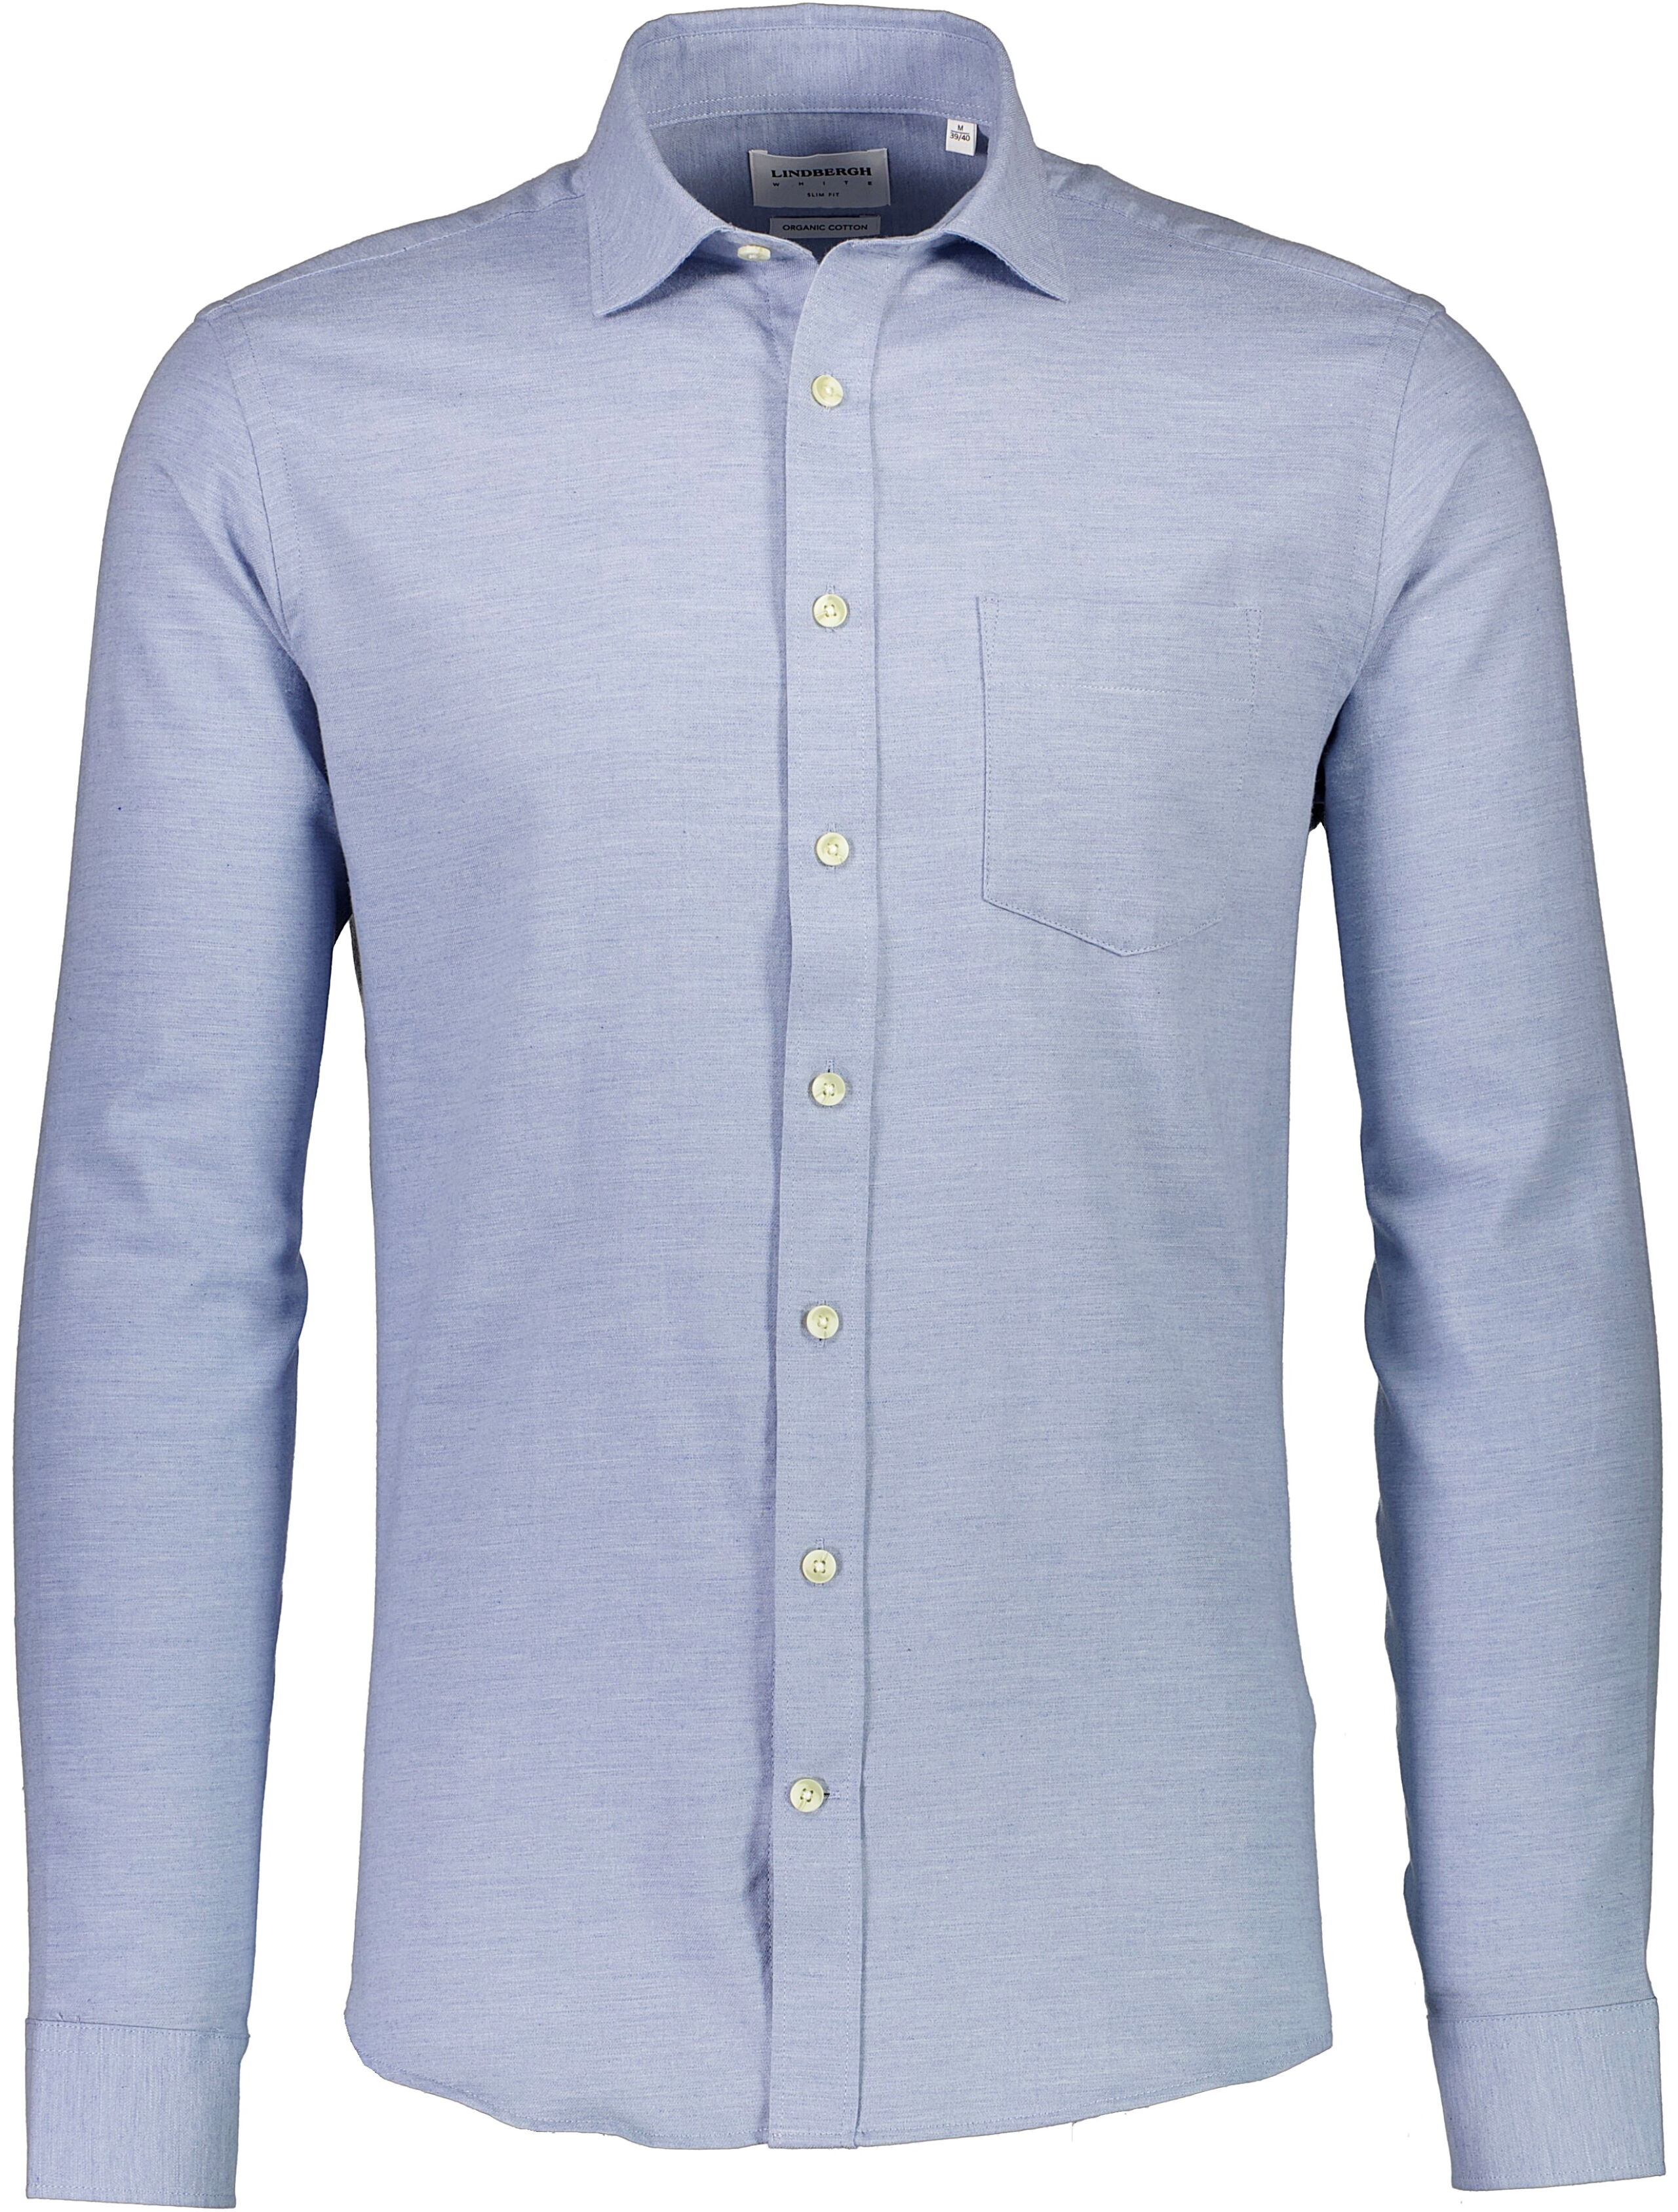 Flannel shirt 30-203380